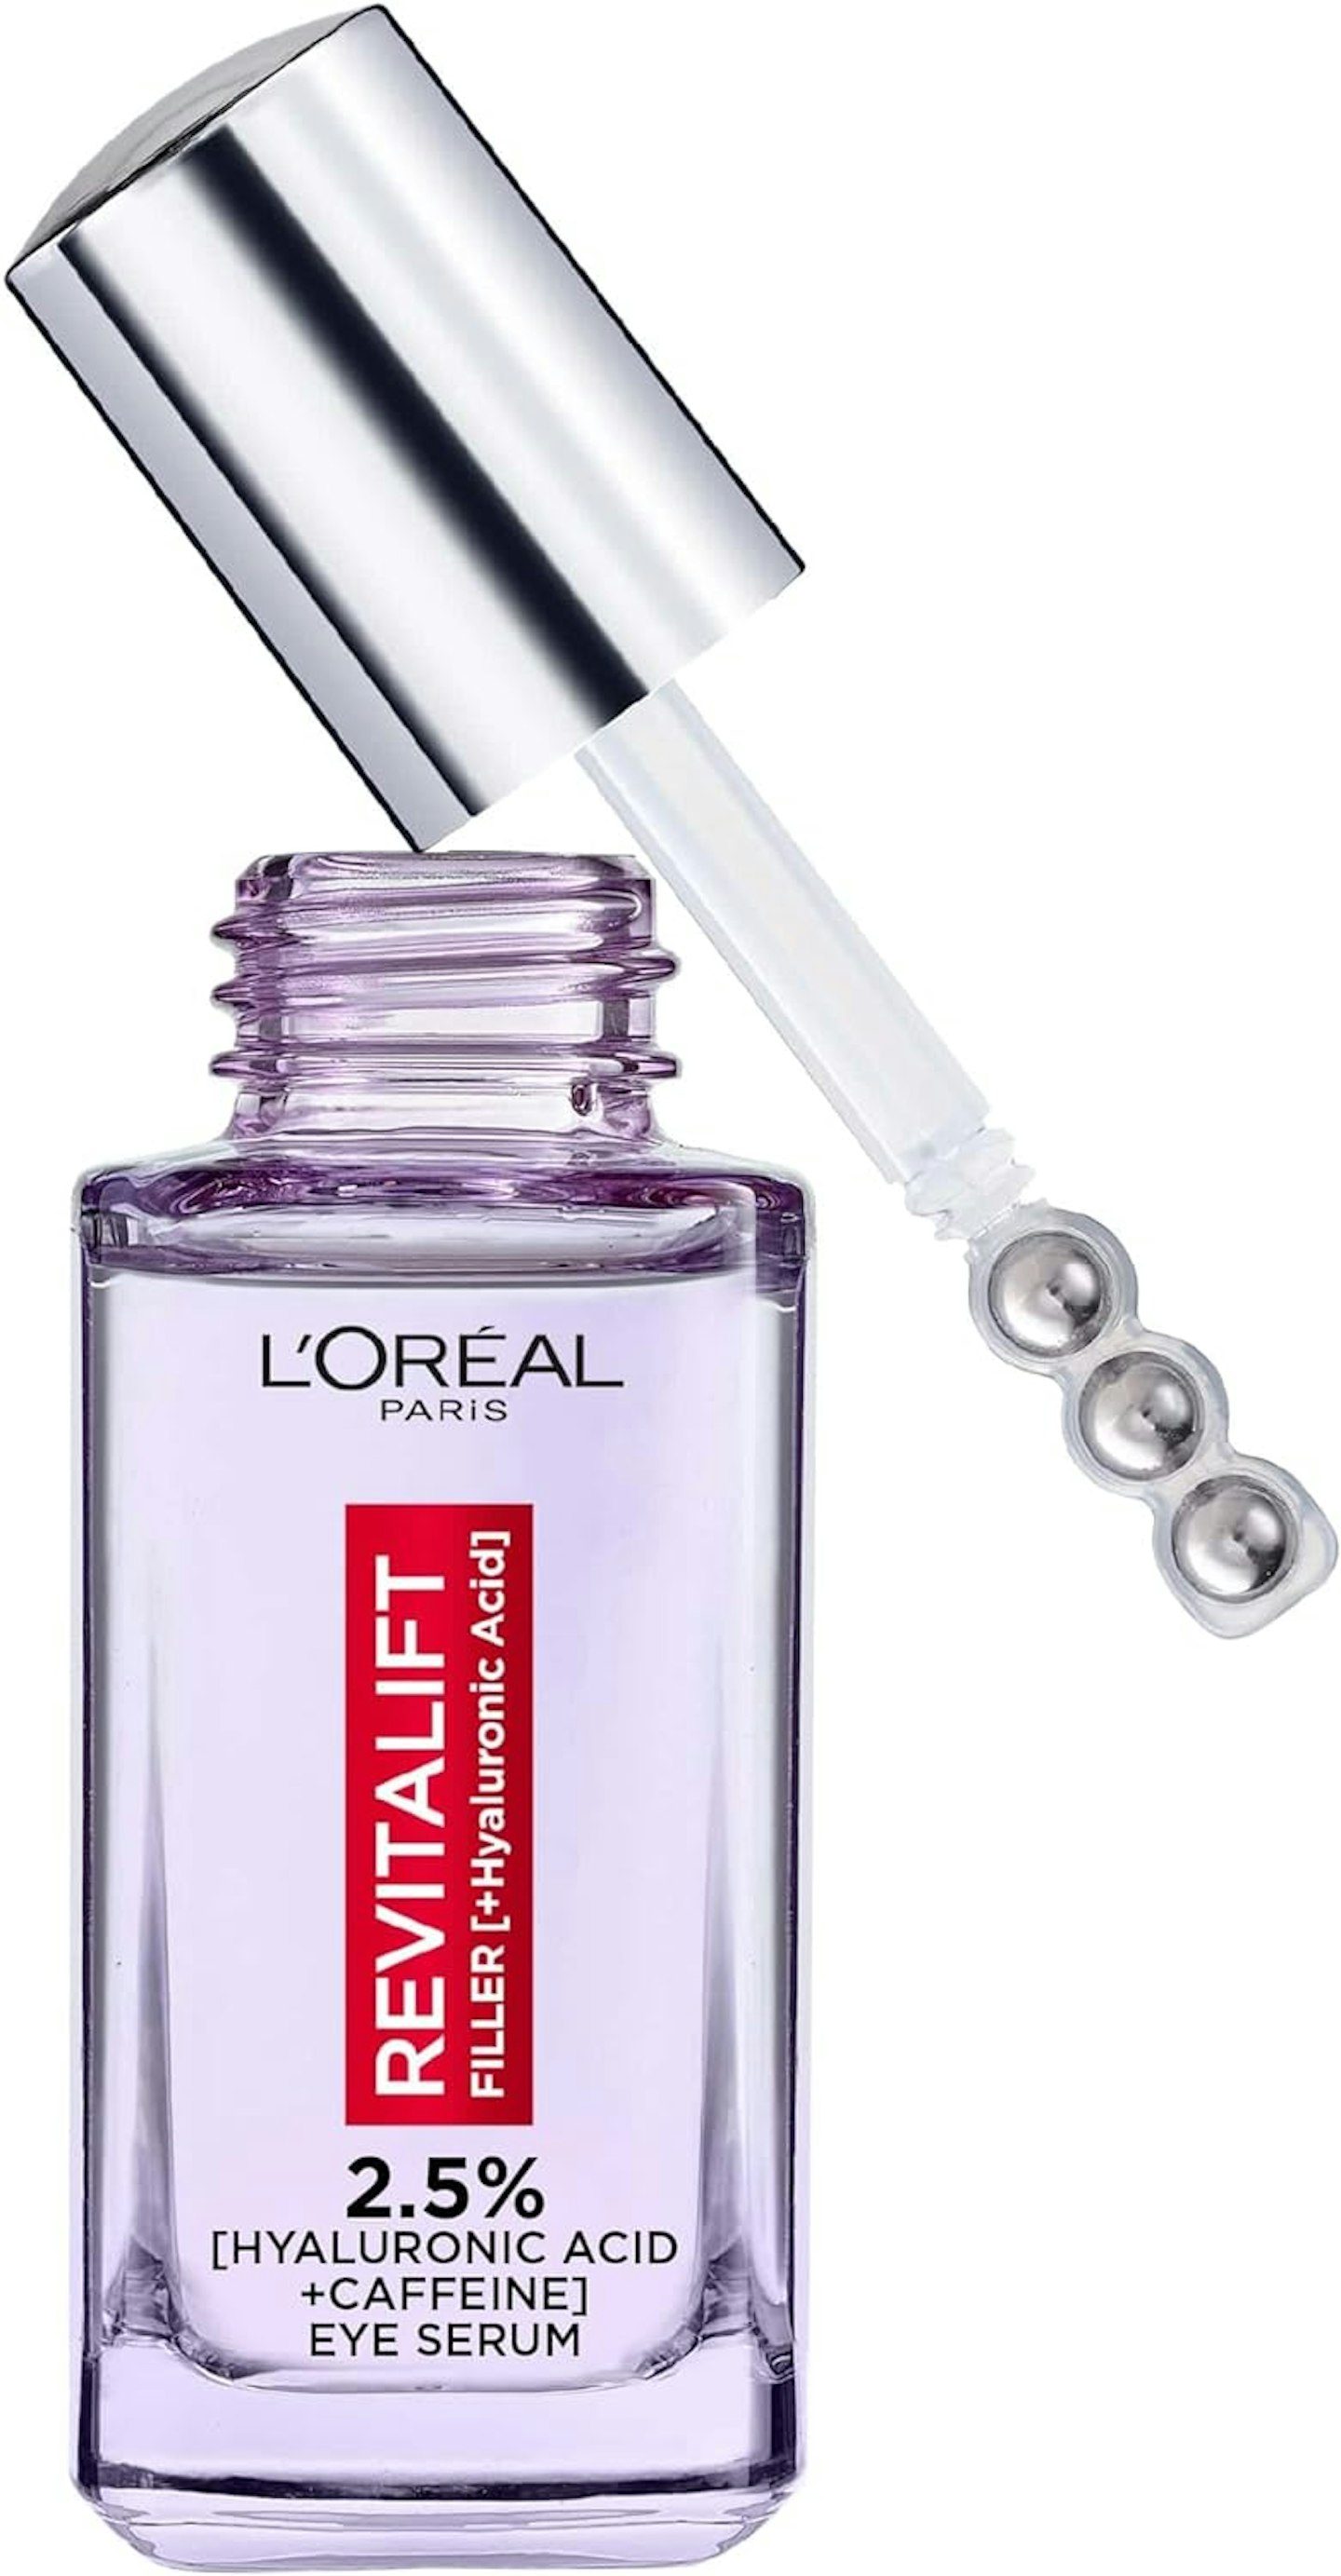 L'Oréal Paris 2.5% Hyaluronic Acid and Caffeine Eye Serum bottle